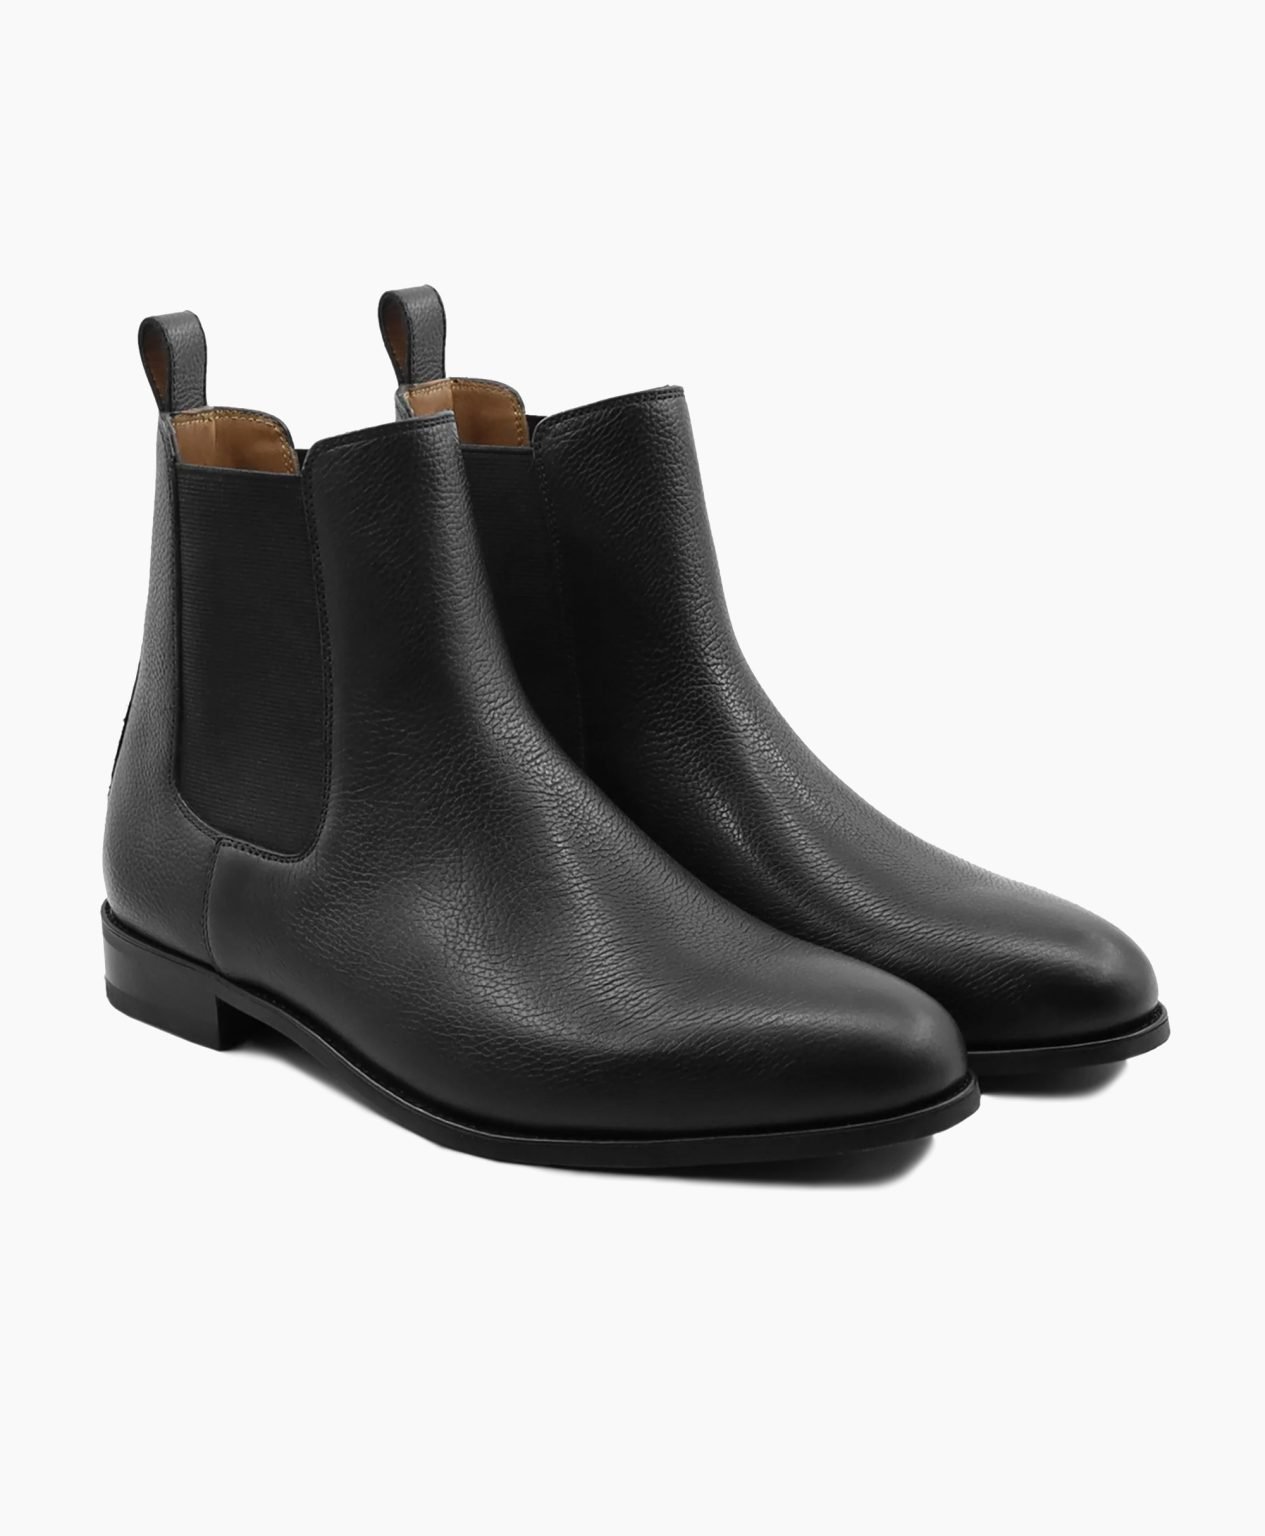 carlisle-chelsea-black-leather -boot-image200